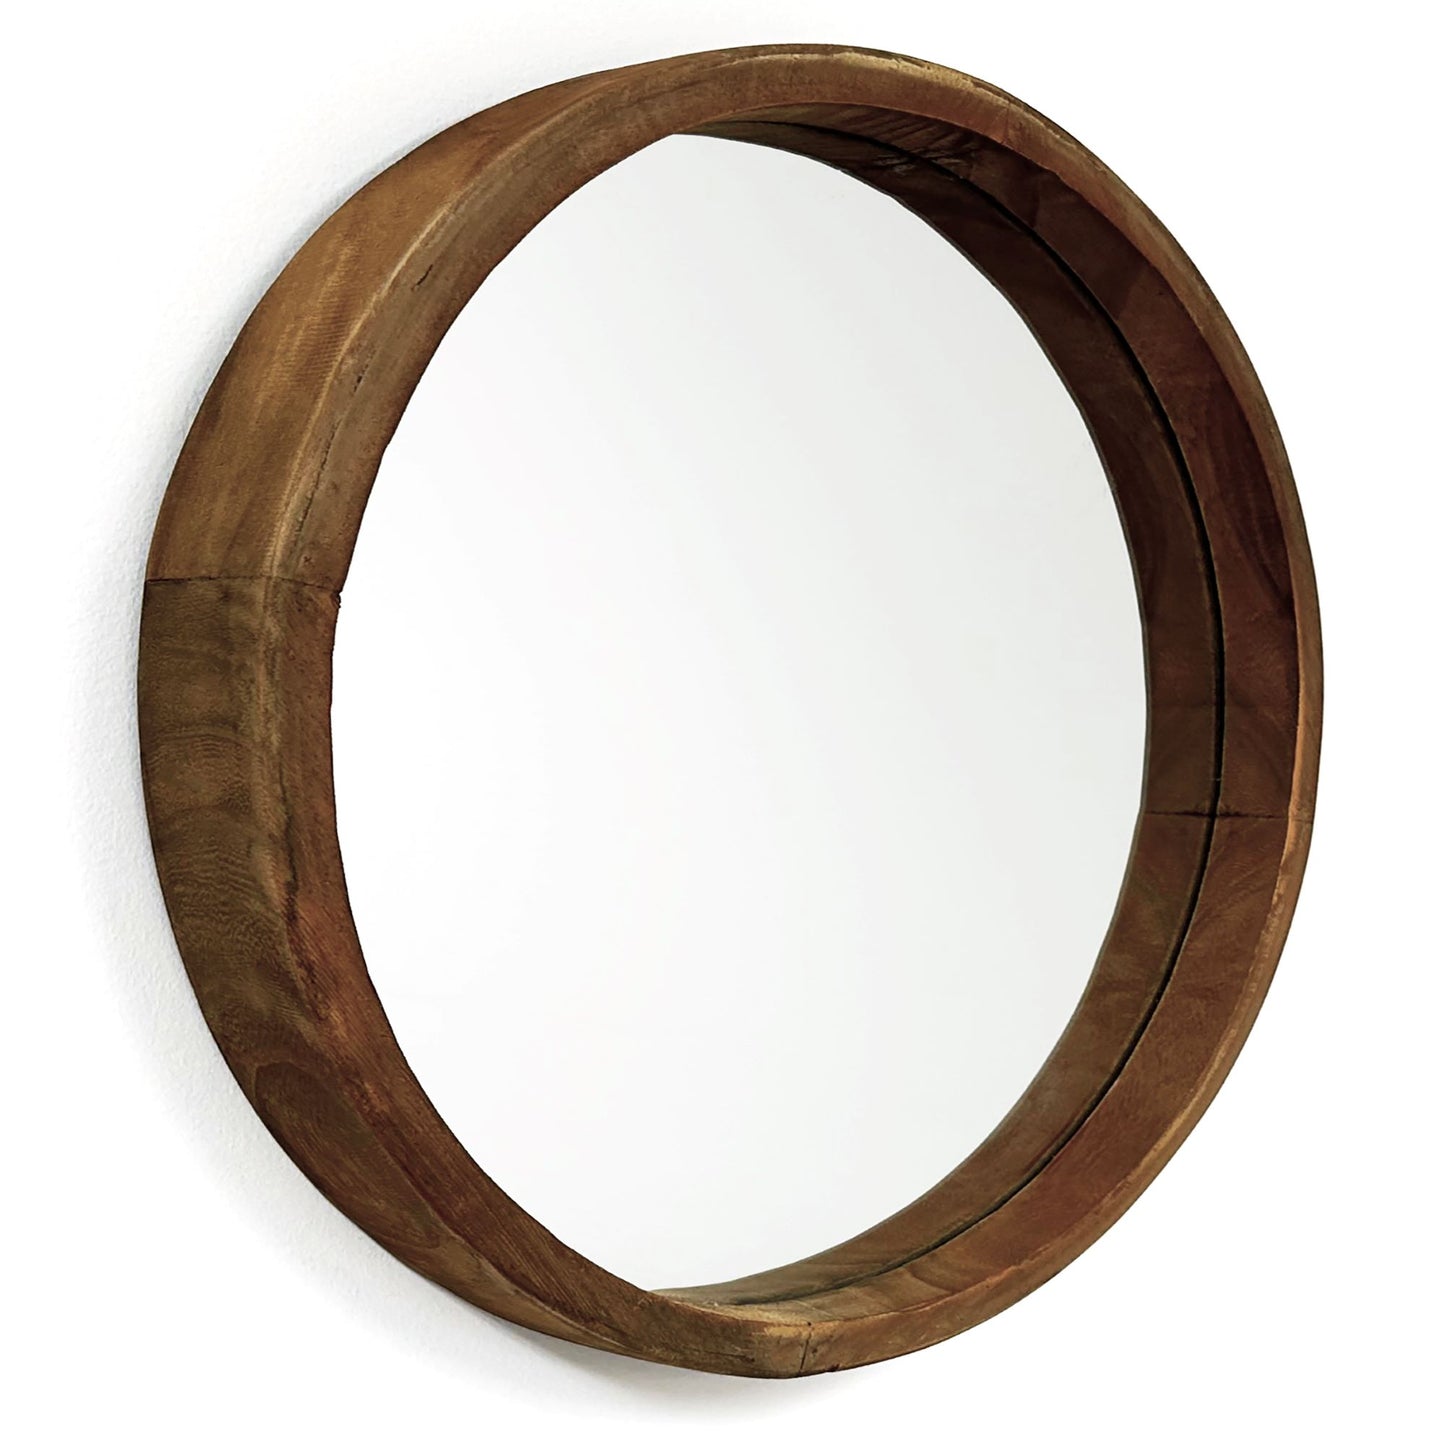 Midwood Wooden Mirror - Medium